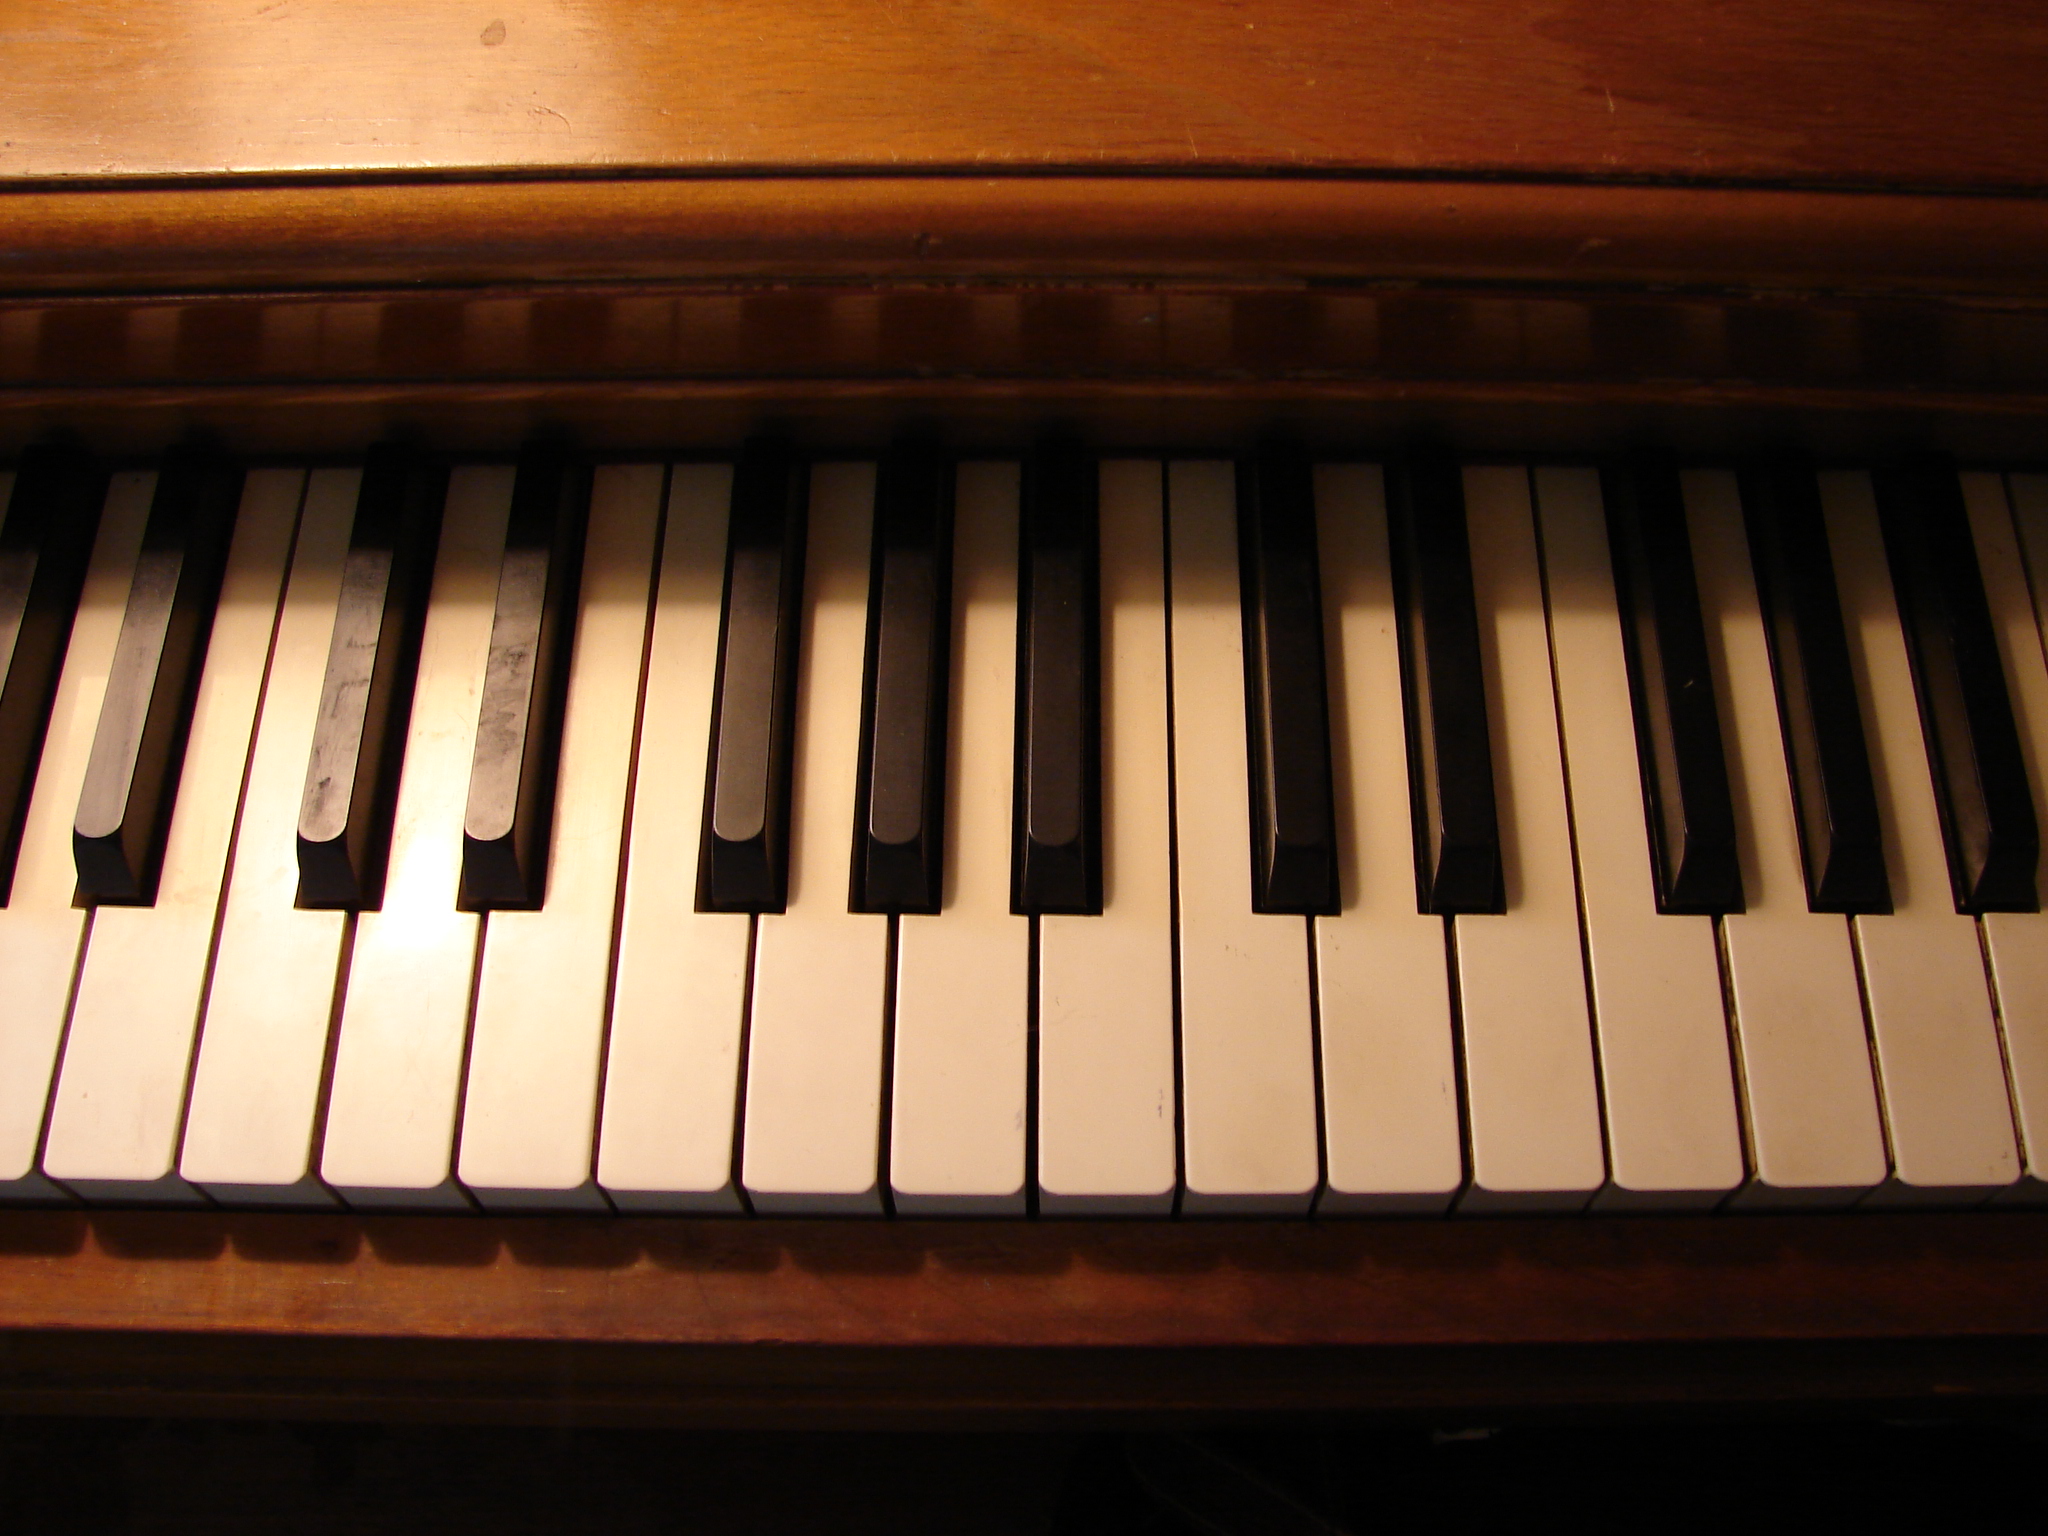 Piano Keys 2 by FantasyStock on DeviantArt